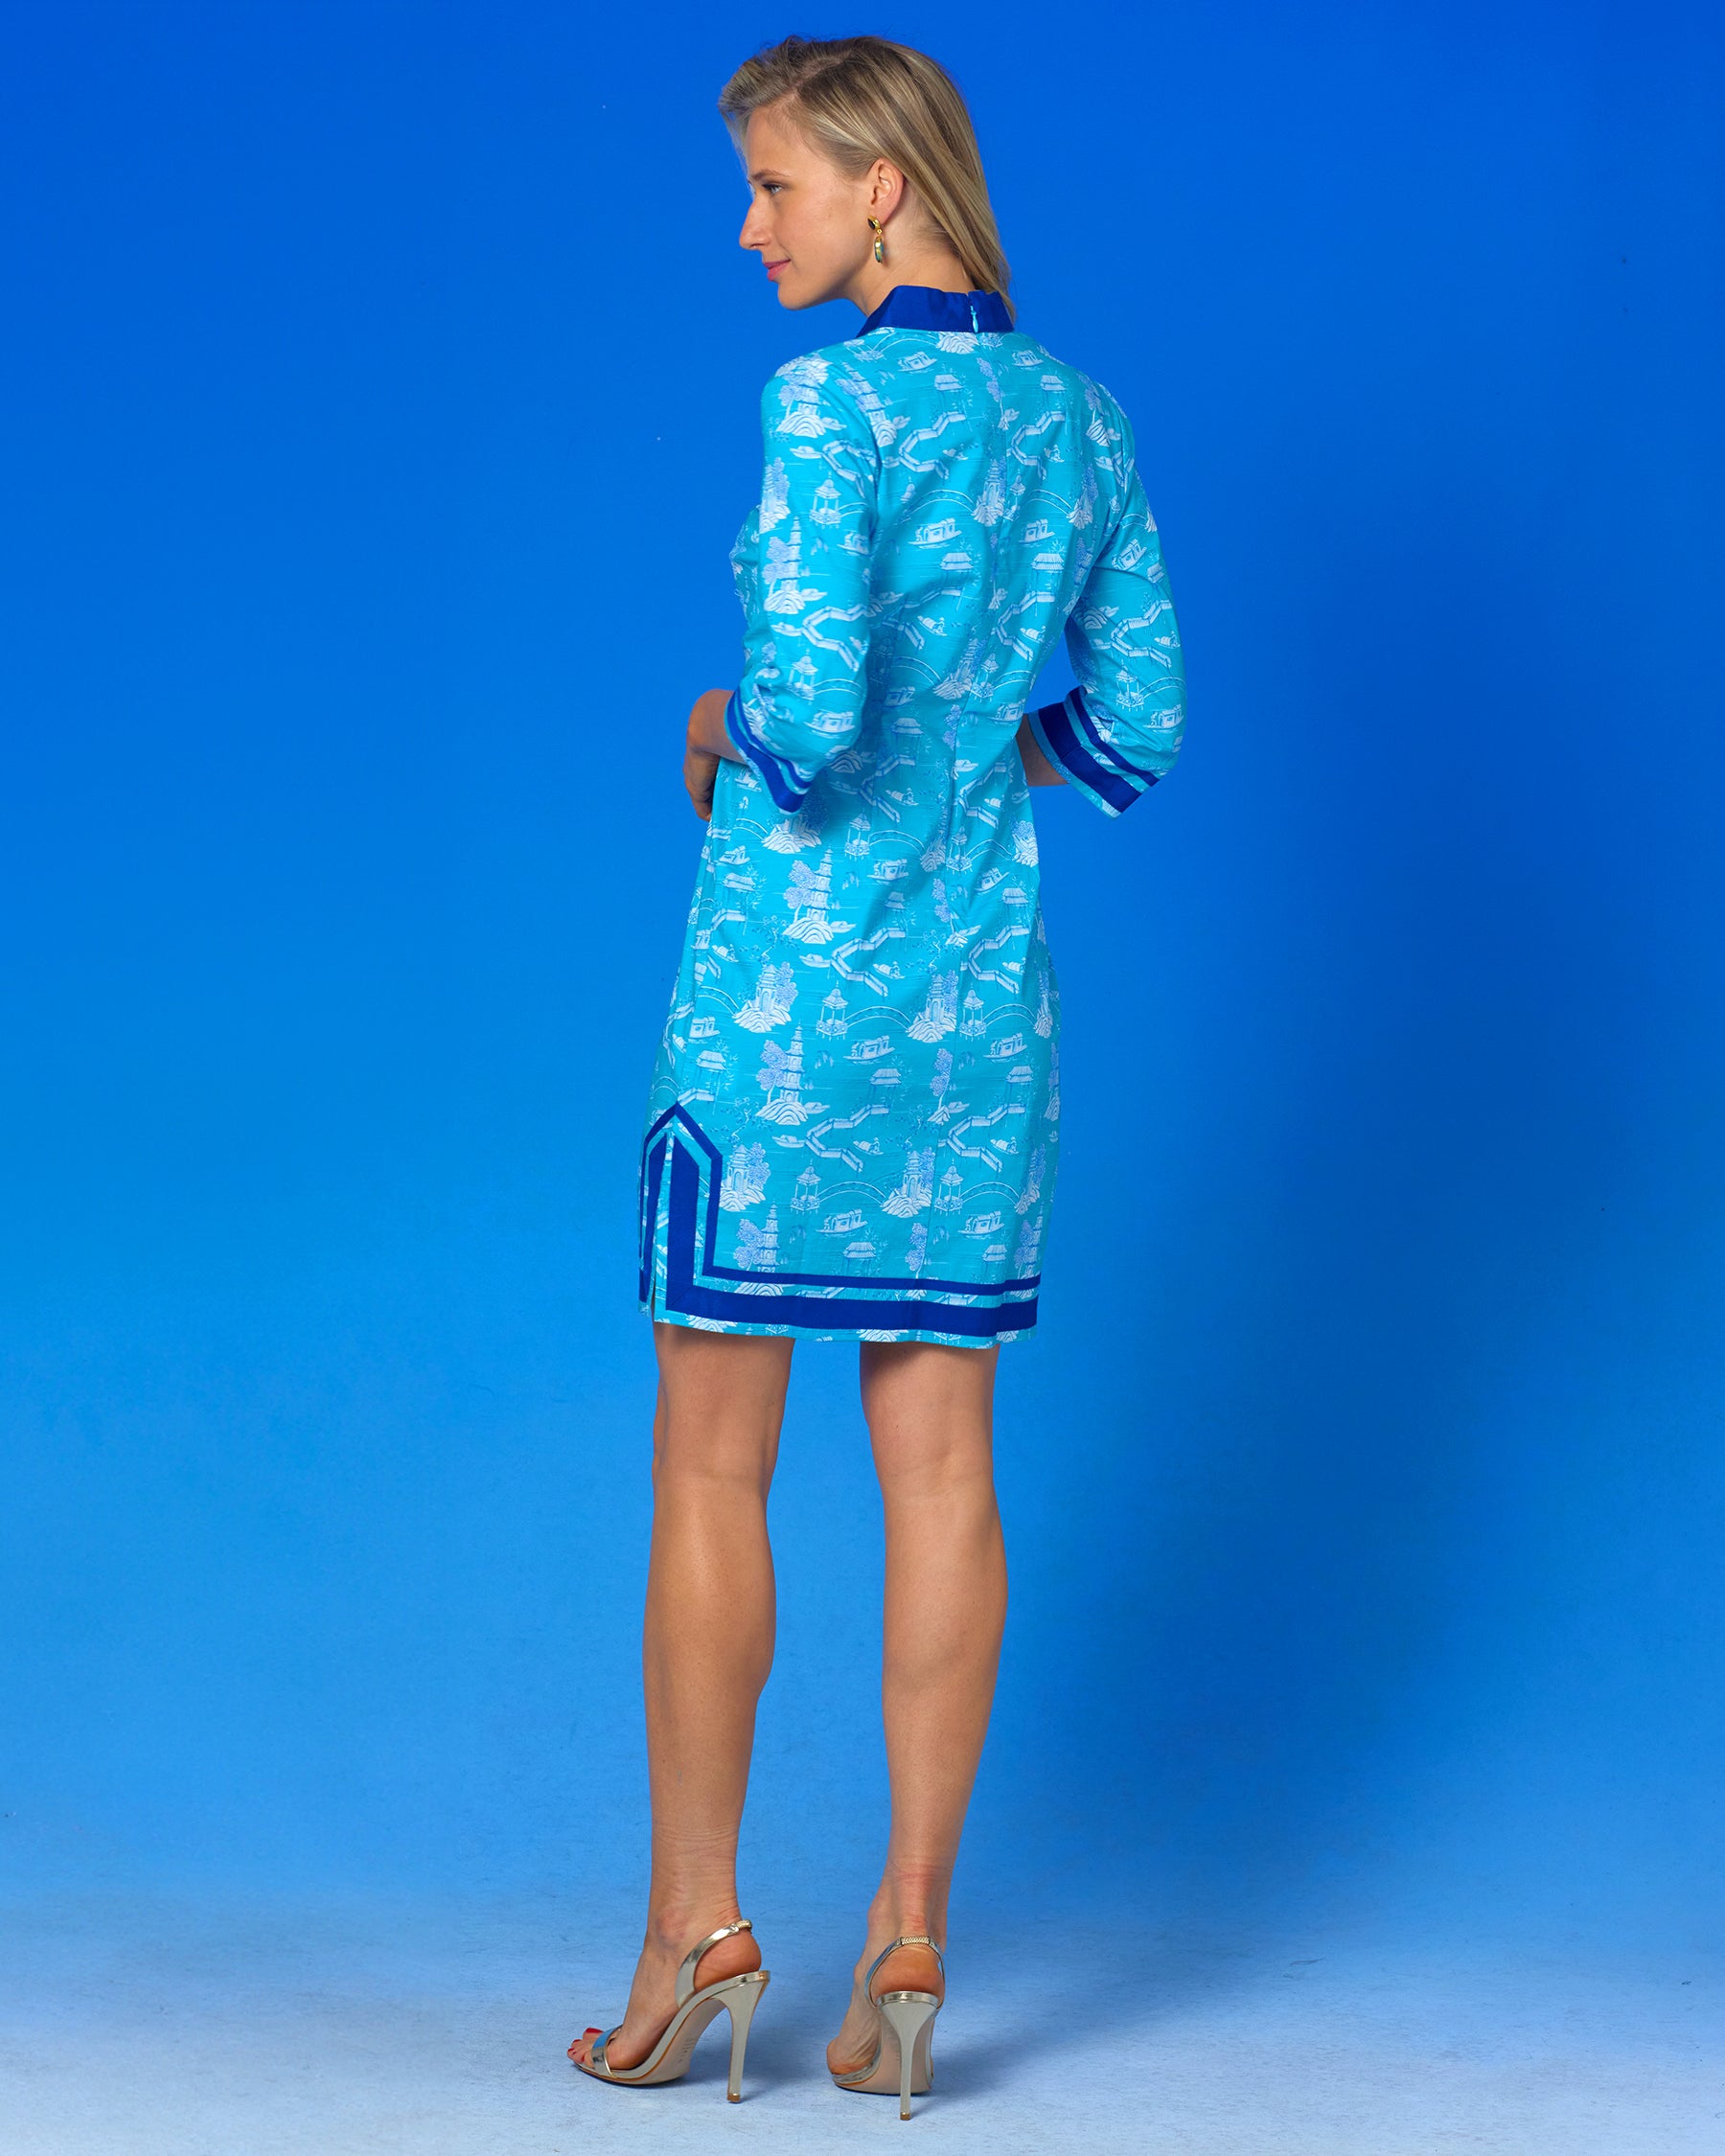 Capri Short Tunic Dress in Turquoise Blue Scenic Toile-Back view